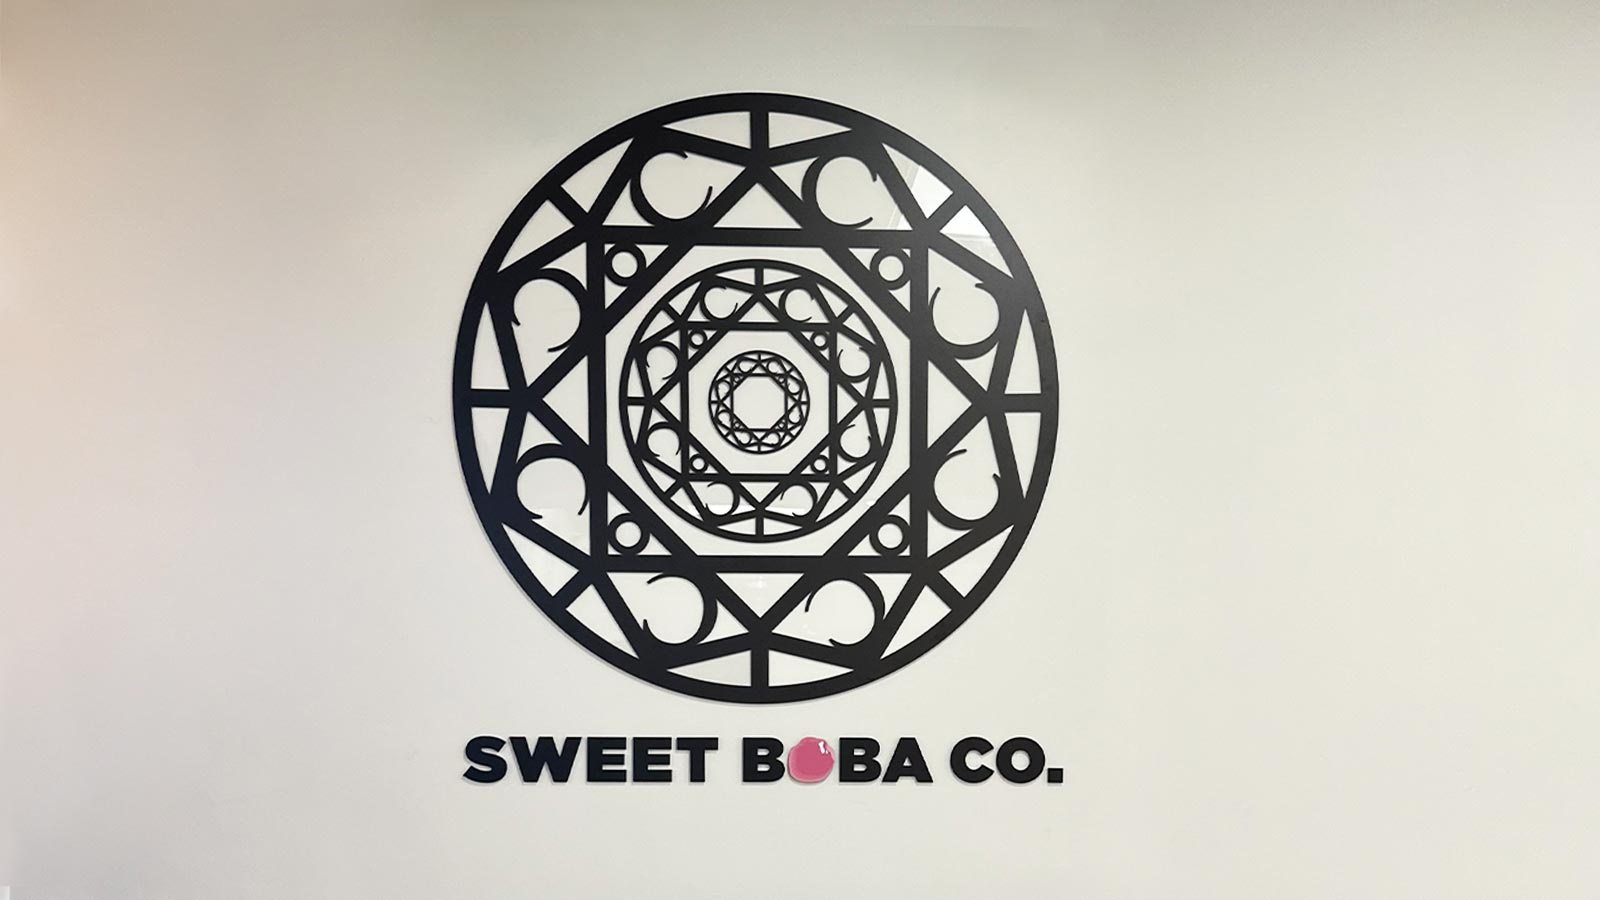 sweet boba co restaurant sign installed indoors